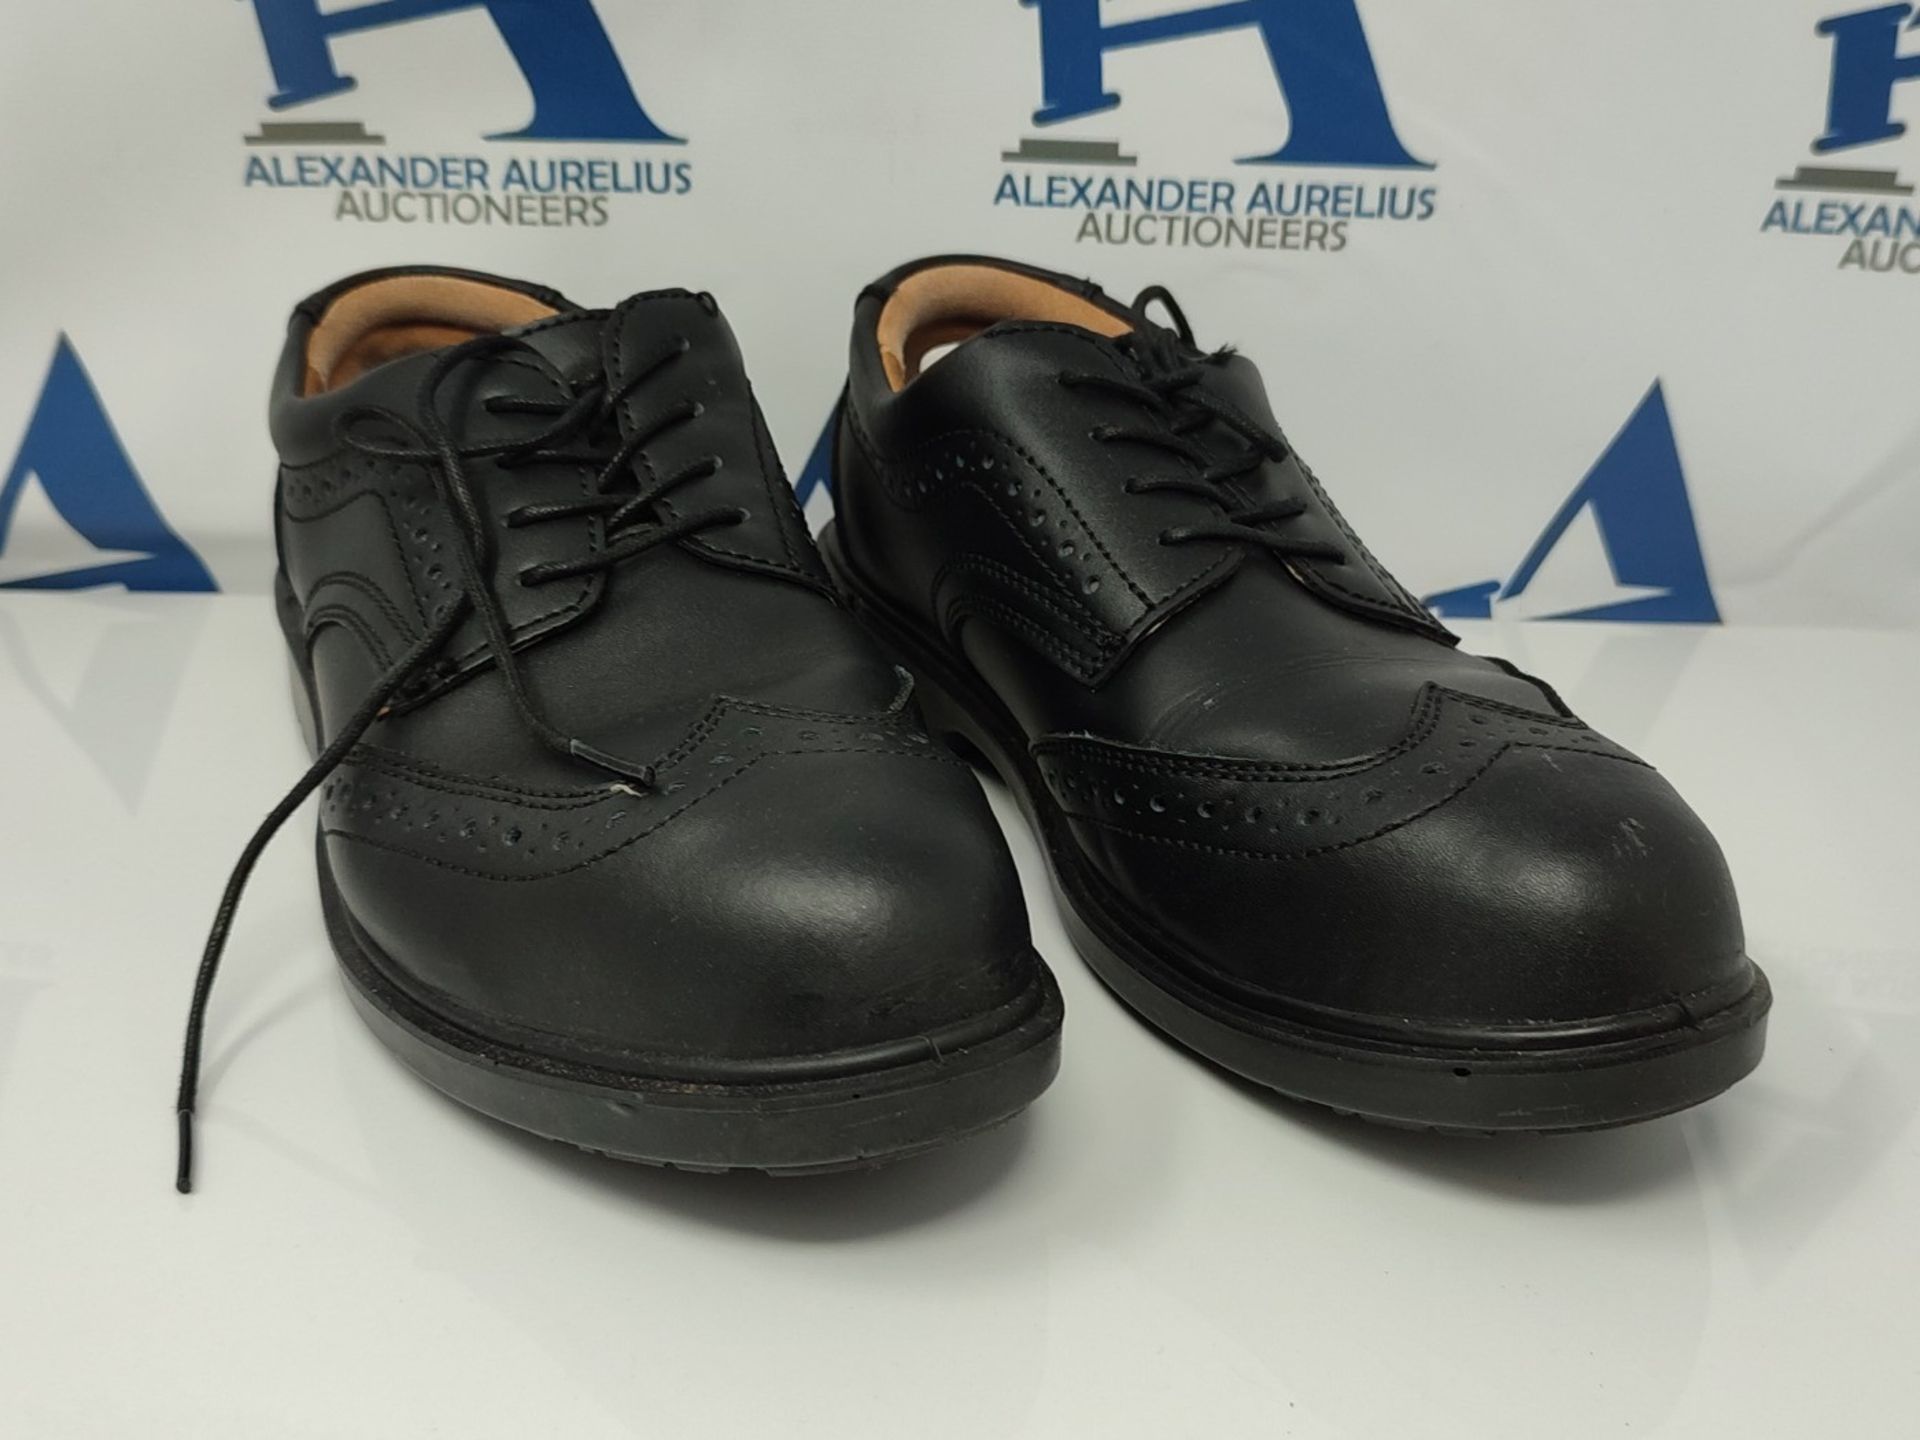 Blackrock Brogue S1-P Lightweight Uniform Safety Shoe, Anti Static Black Leather Safet - Image 3 of 3